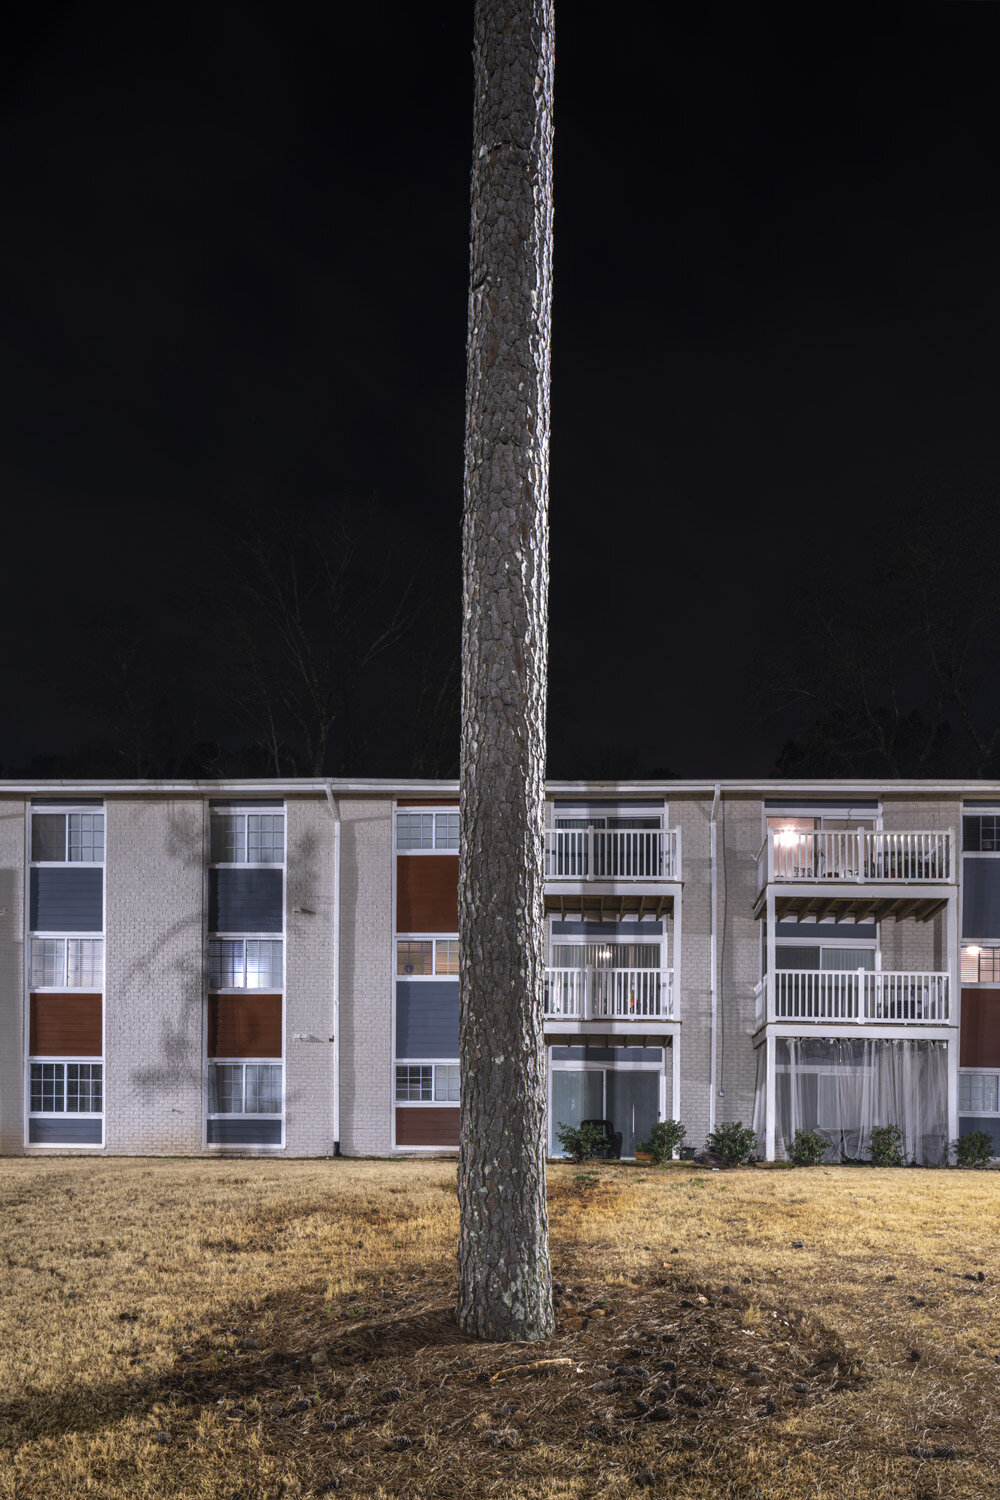 Loblolly Pine #3, Decatur, Georgia, 2021.jpg